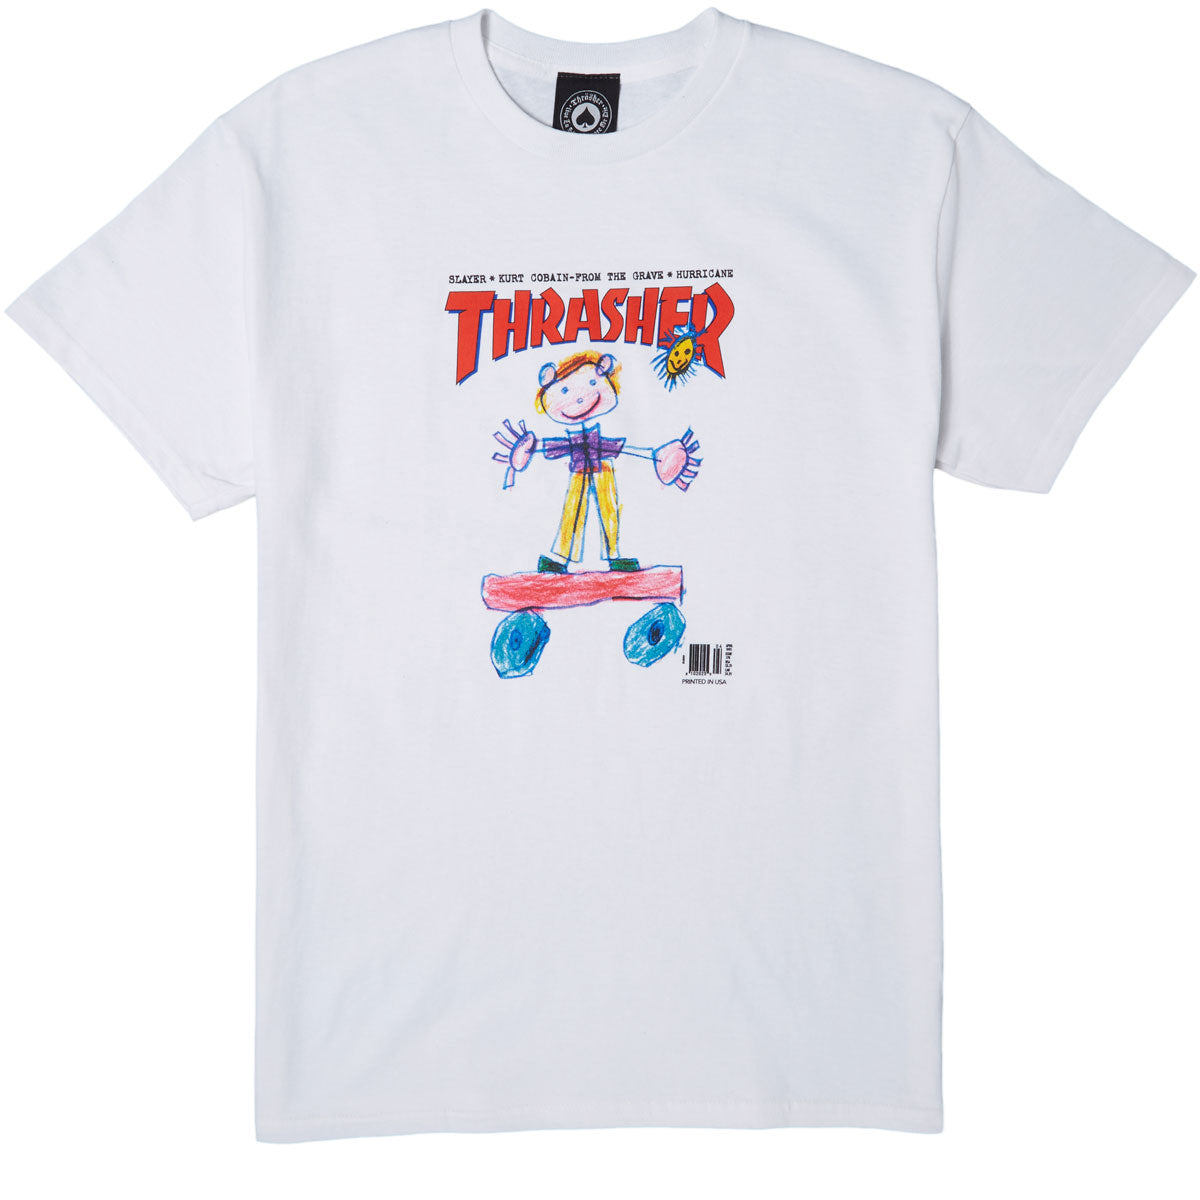 Thrasher Kid Cover T-Shirt - White image 1